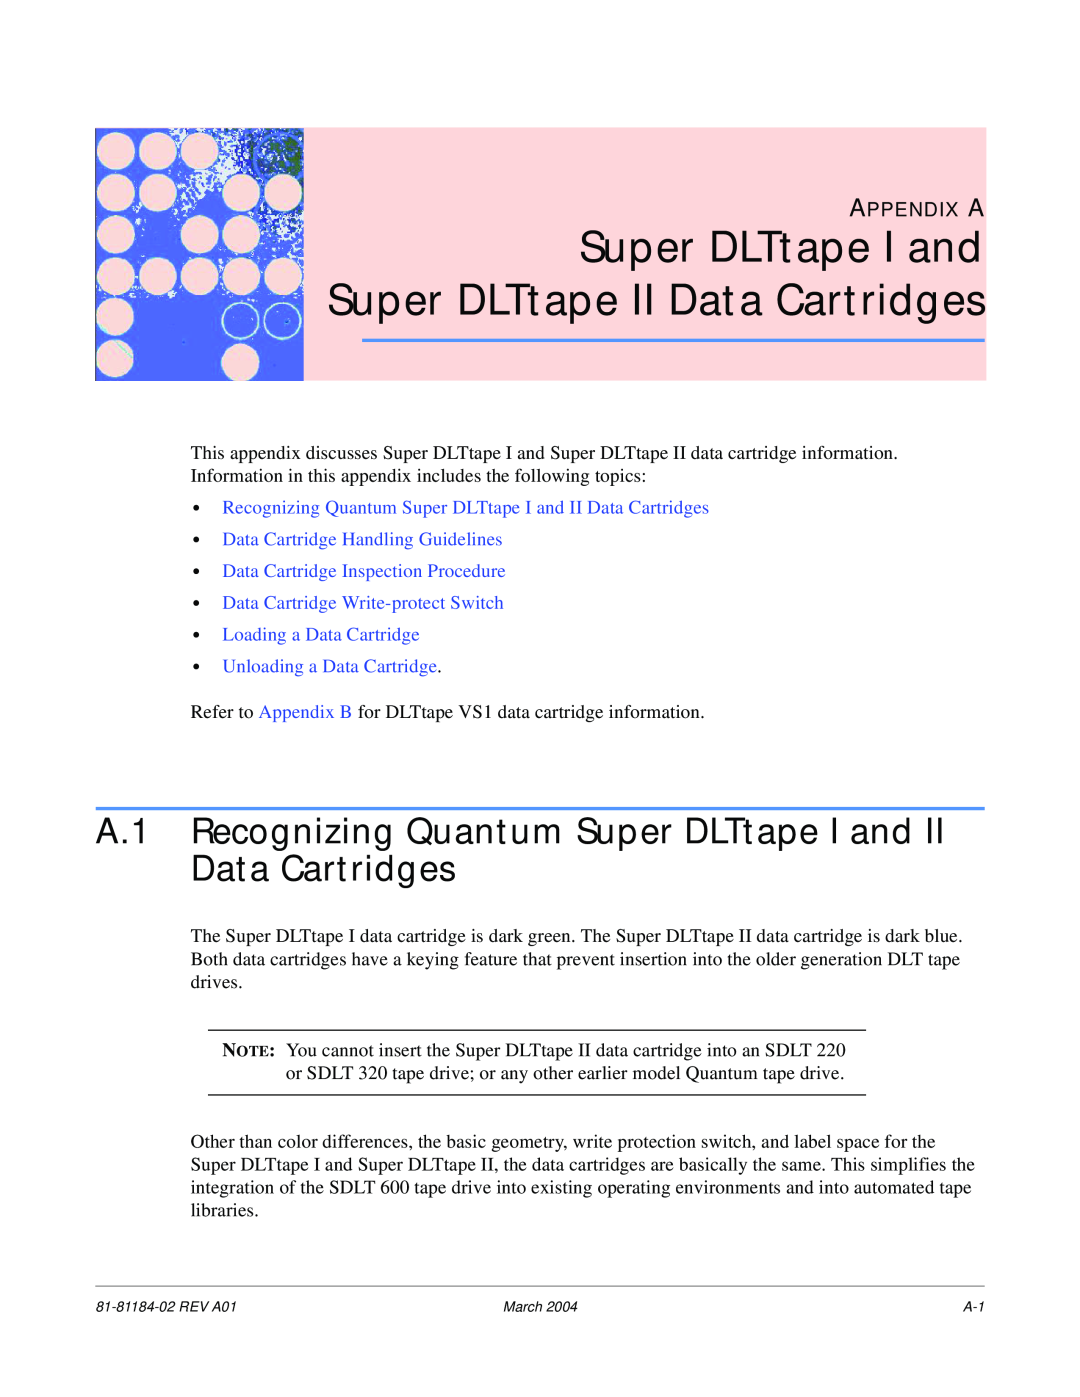 Tandberg Data 600 Super DLTtape I and Super DLTtape II Data Cartridges, Appendix A, Data Cartridge Handling Guidelines 